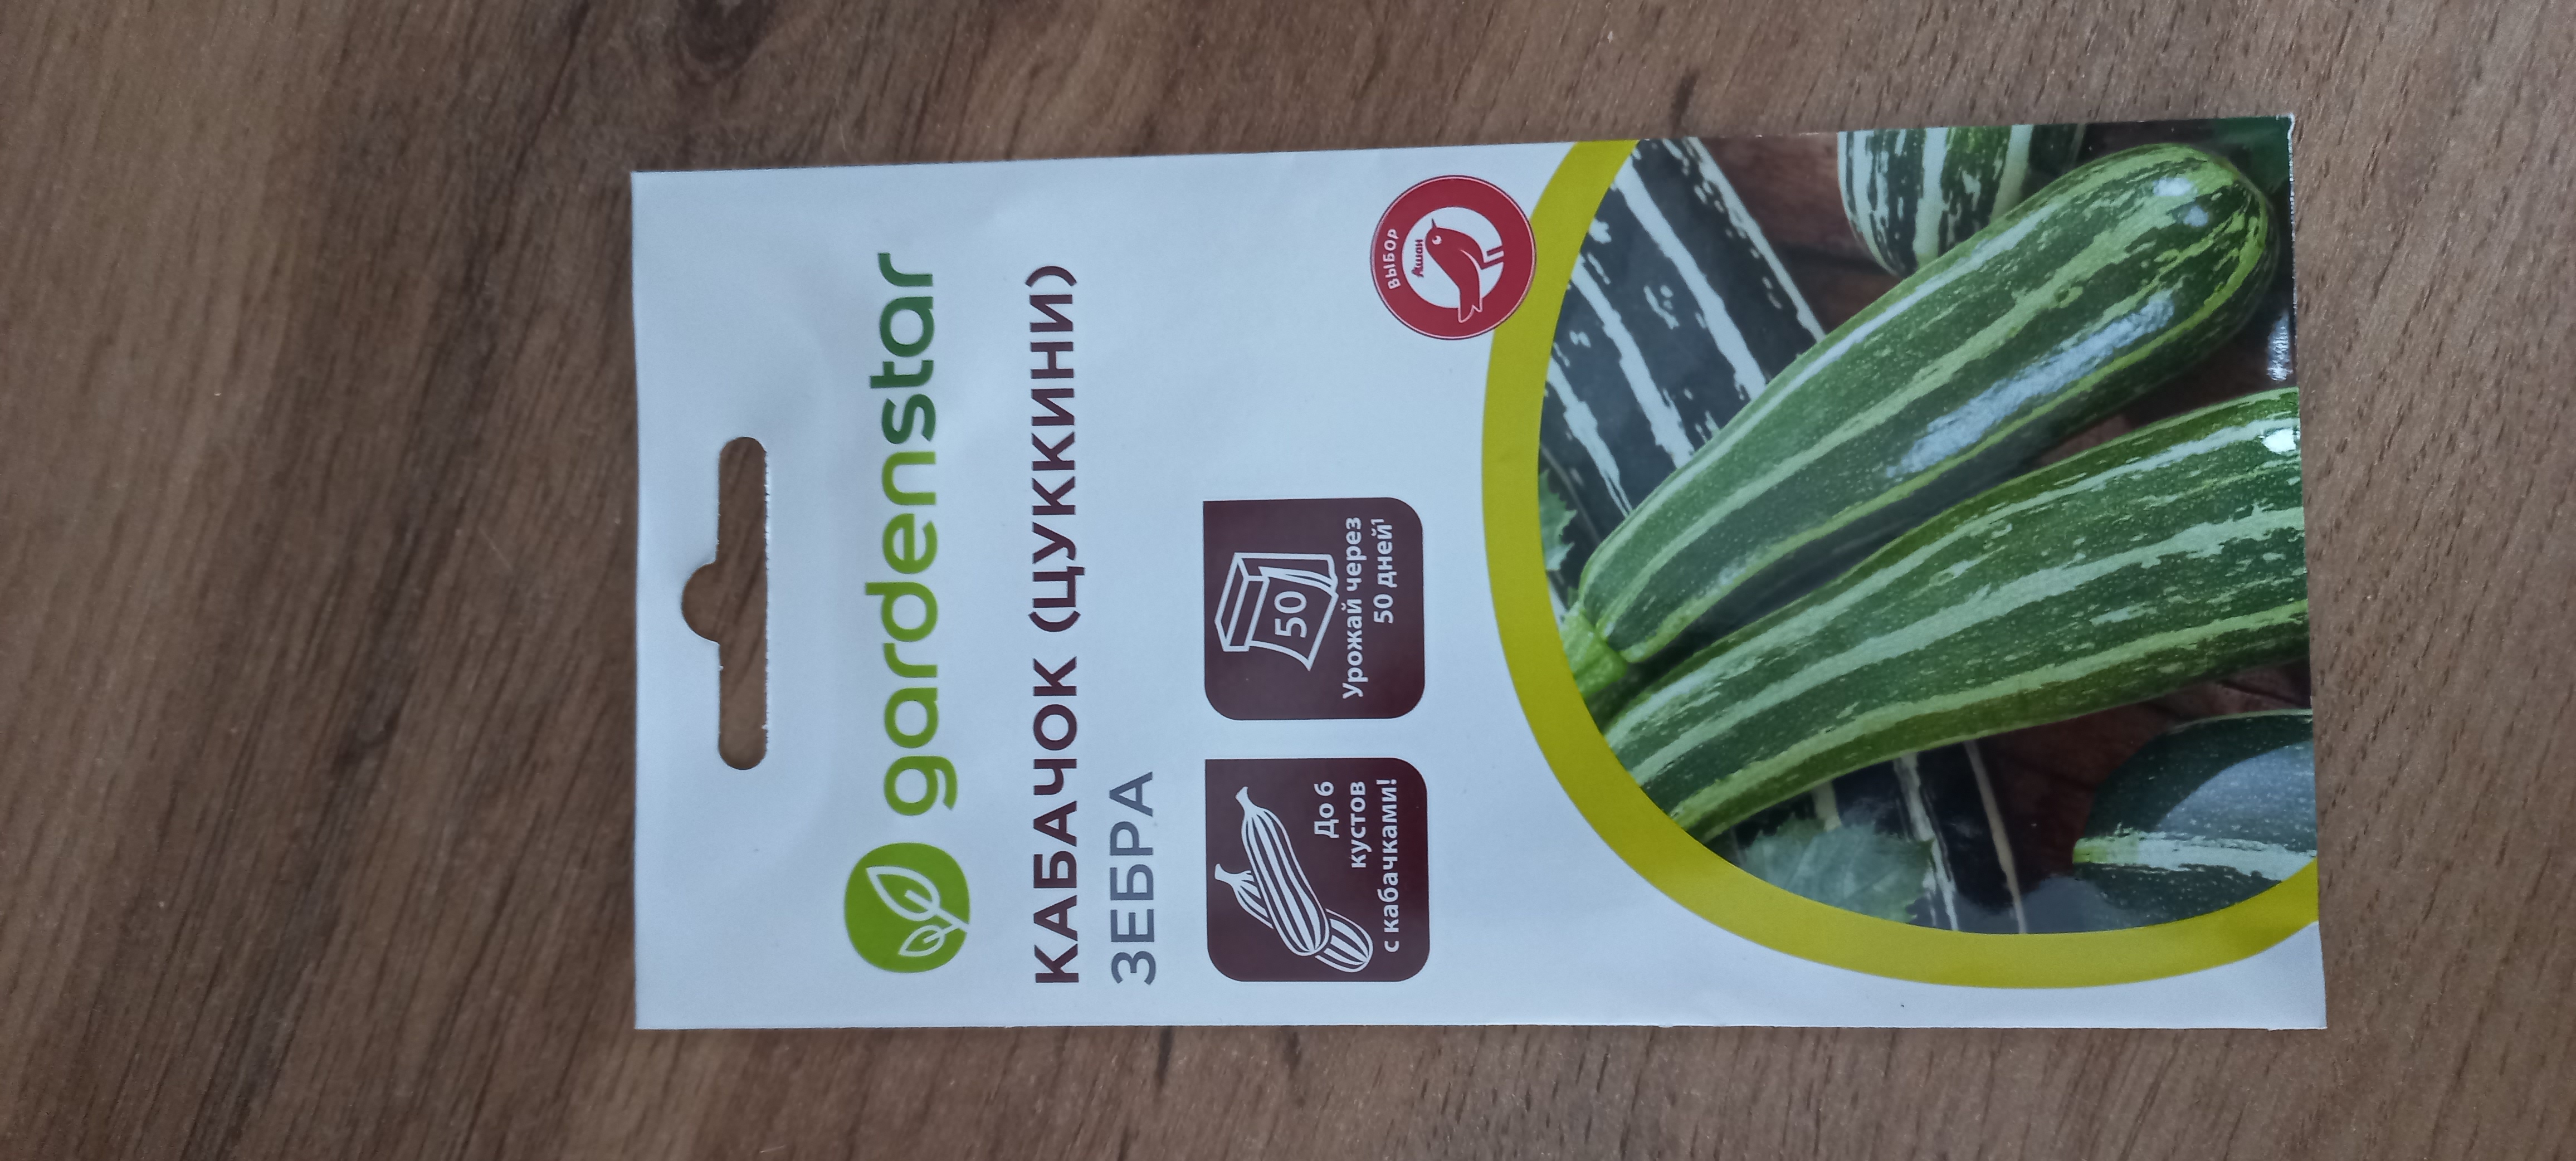 Семена кабачок Garden Star Зебра цуккини 1 уп. - отзывы покупателей наМегамаркет